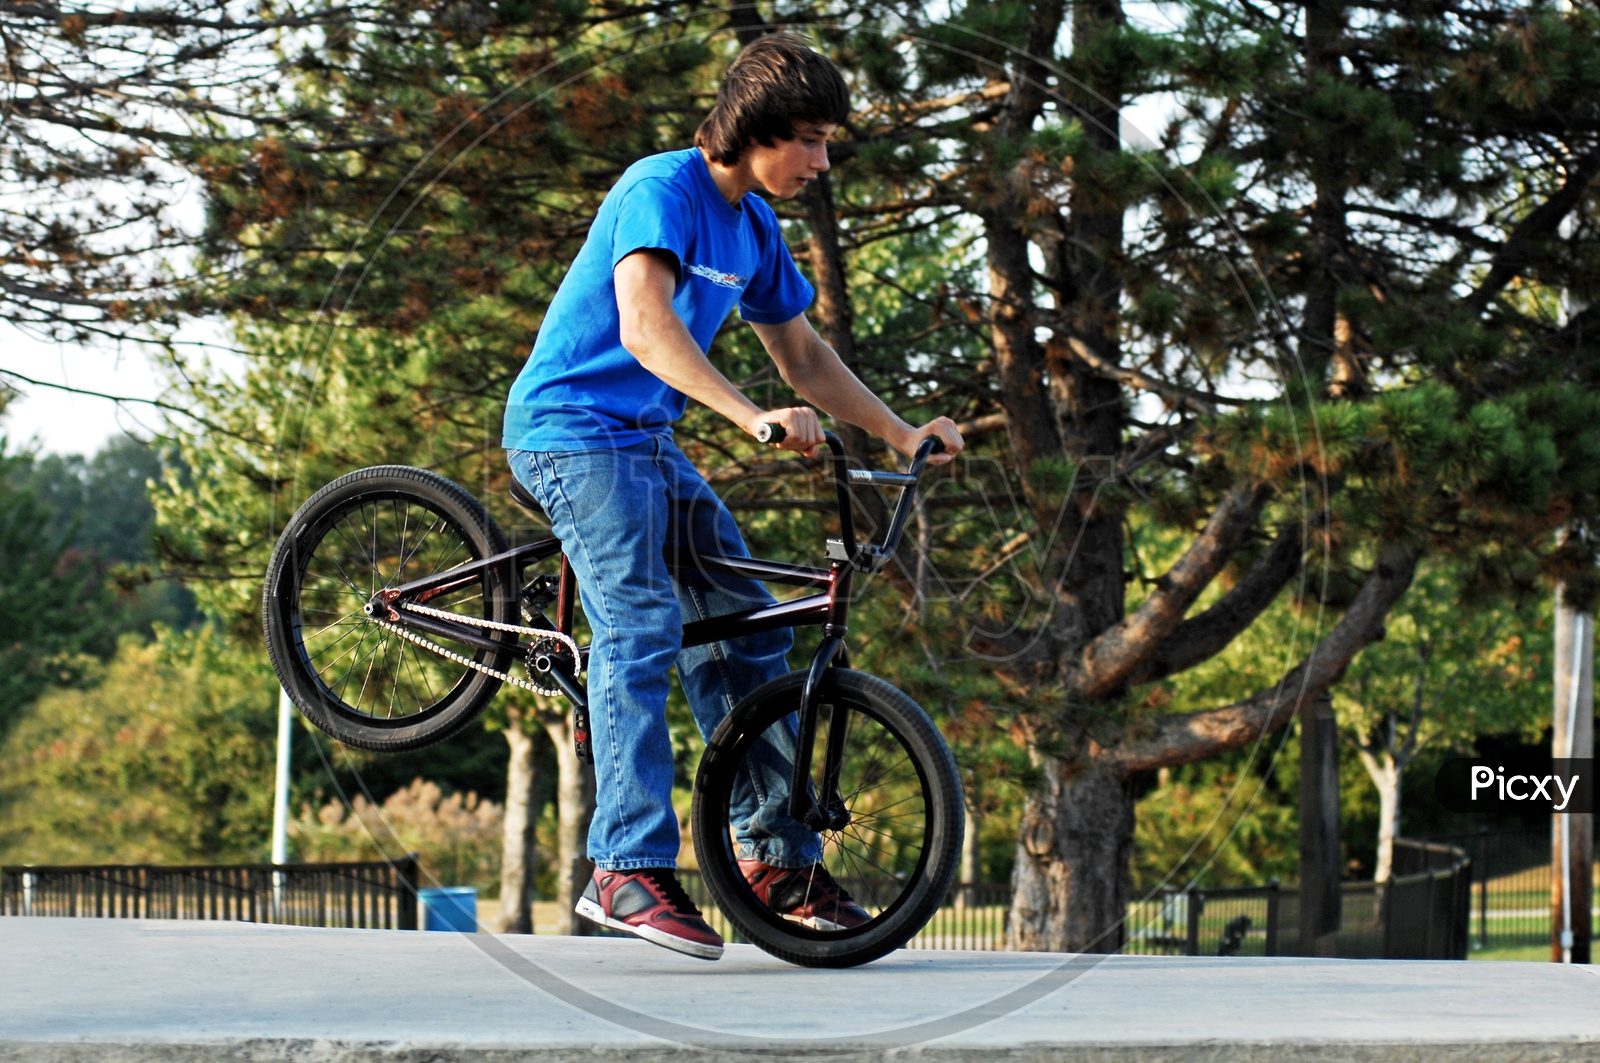 A Young boy riding BMX